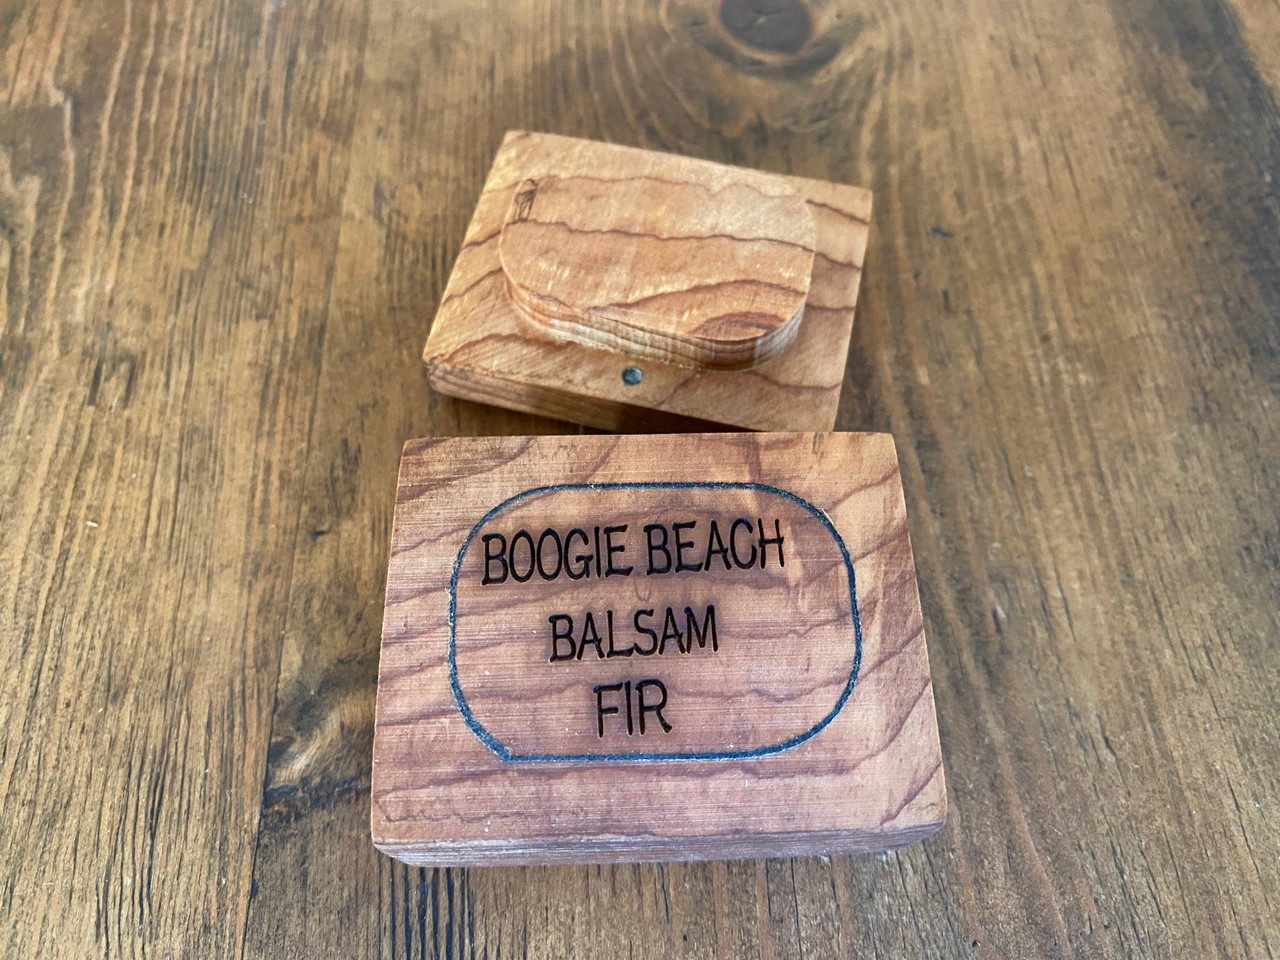 Boogie Beach Box - Balsam Fir - made on Vancouver Island, BC